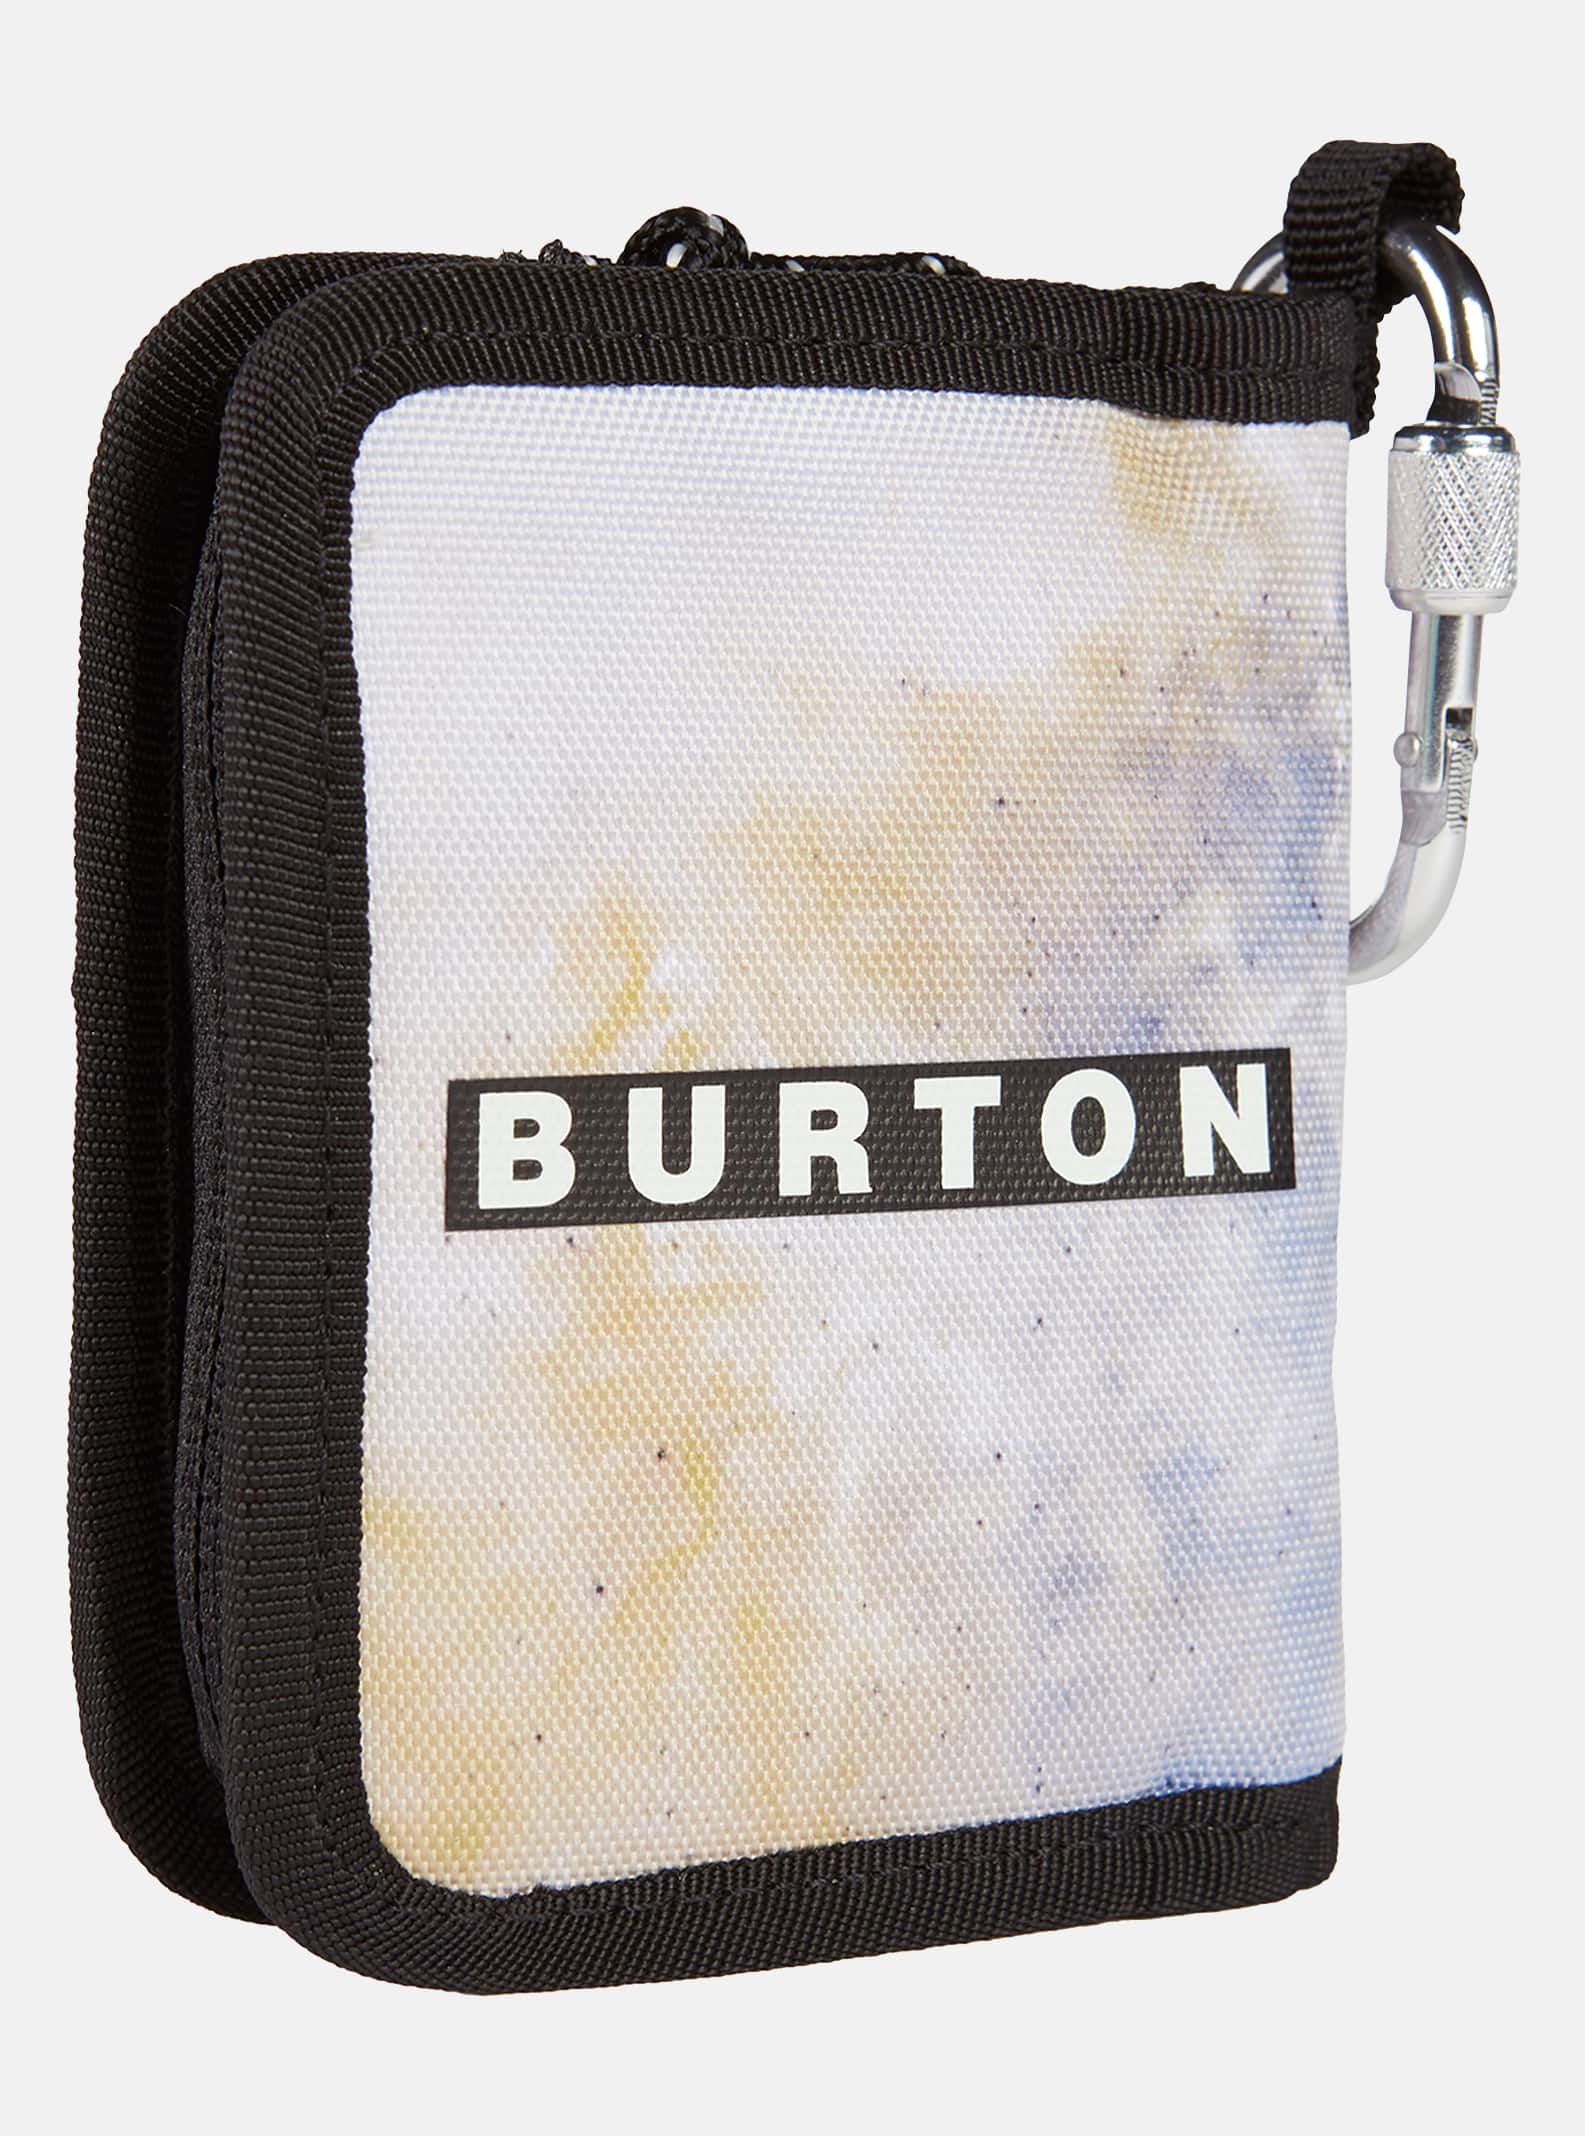 Burton Japan Zip Pass plånbok, Stout White Voyager